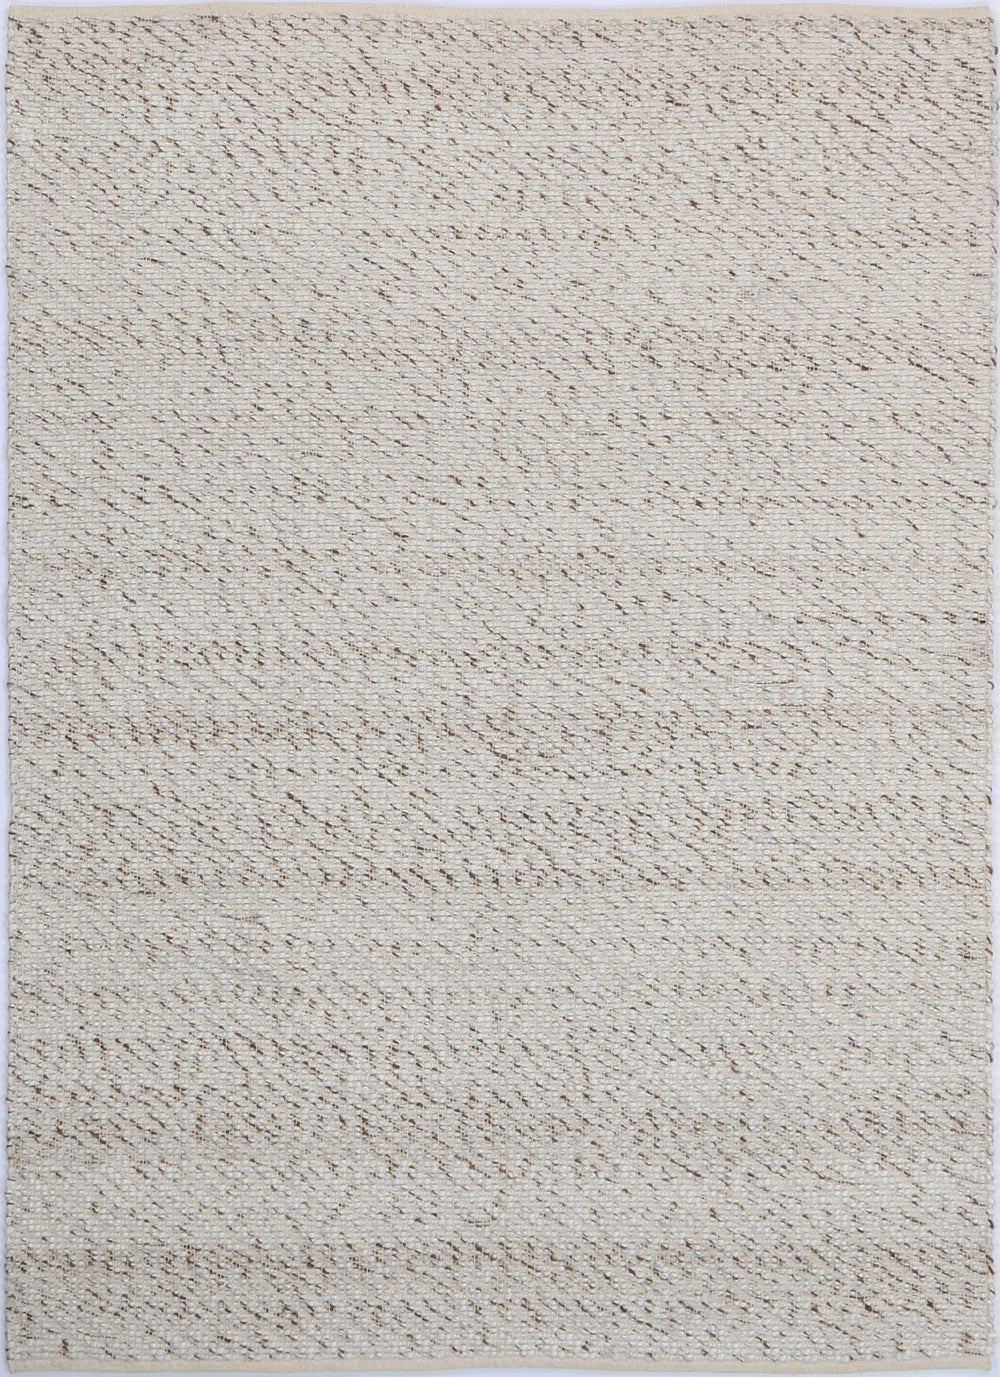 Basalt Beige Wool Blend Textured Rug